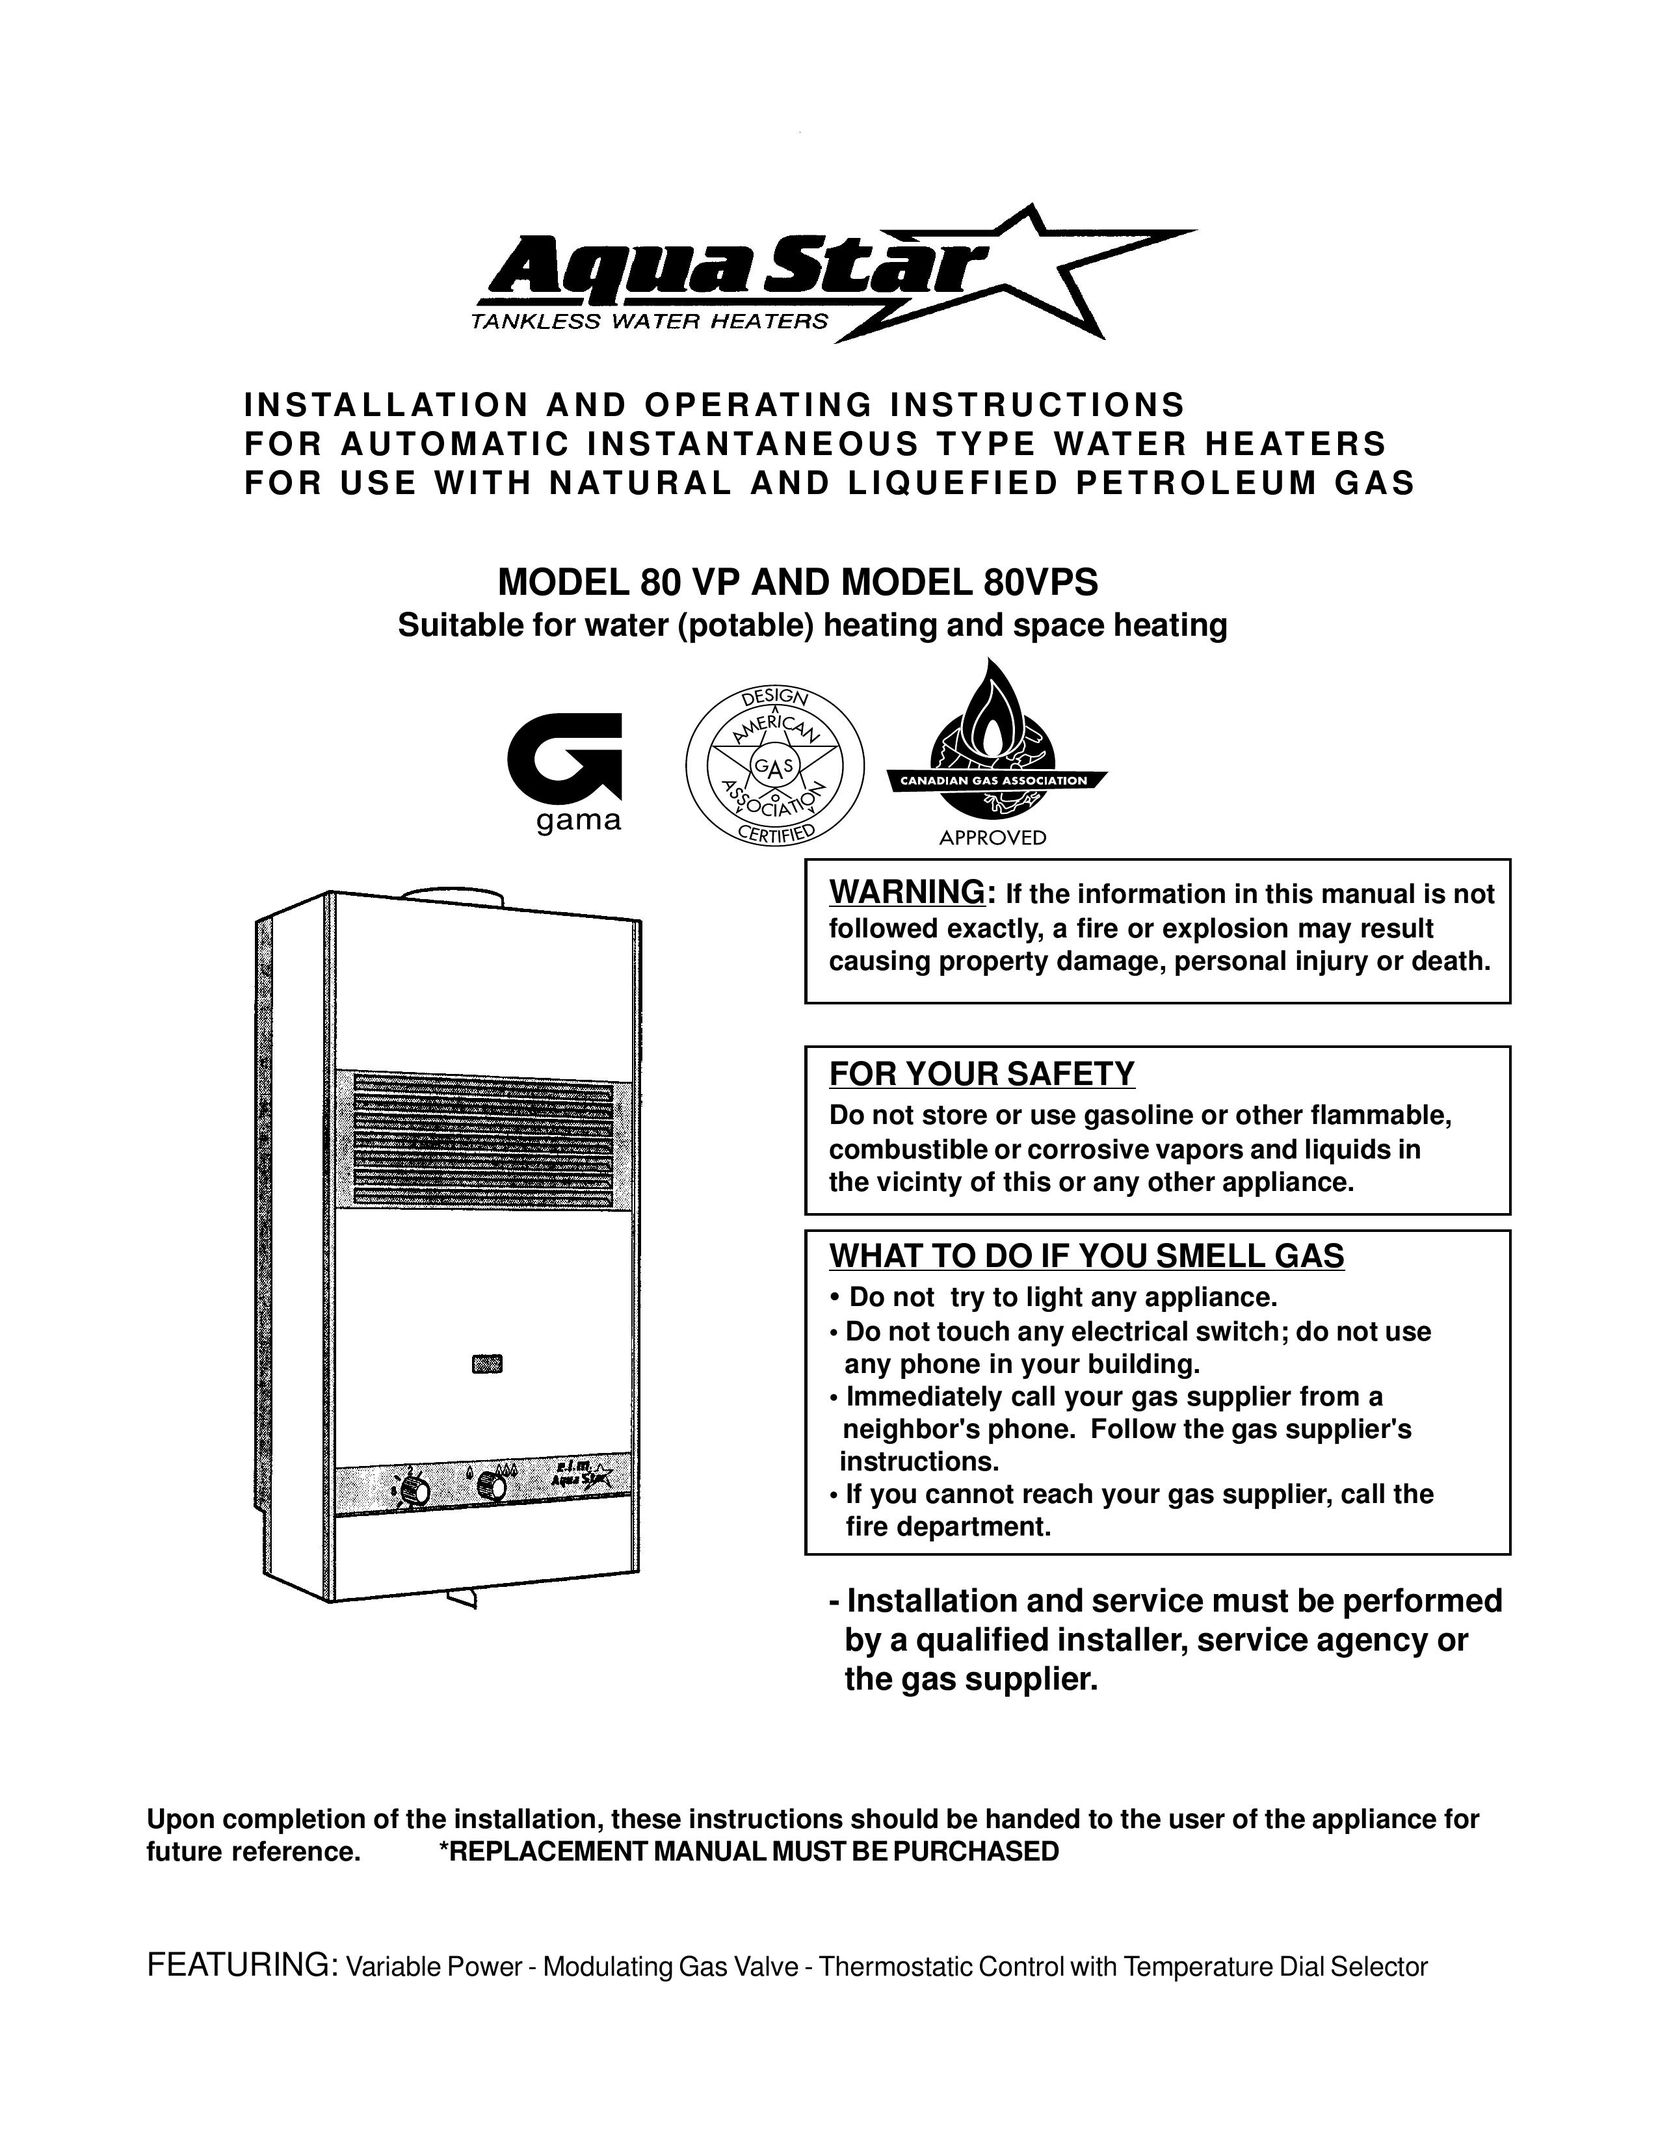 AquaStar 80 VPS Water Heater User Manual